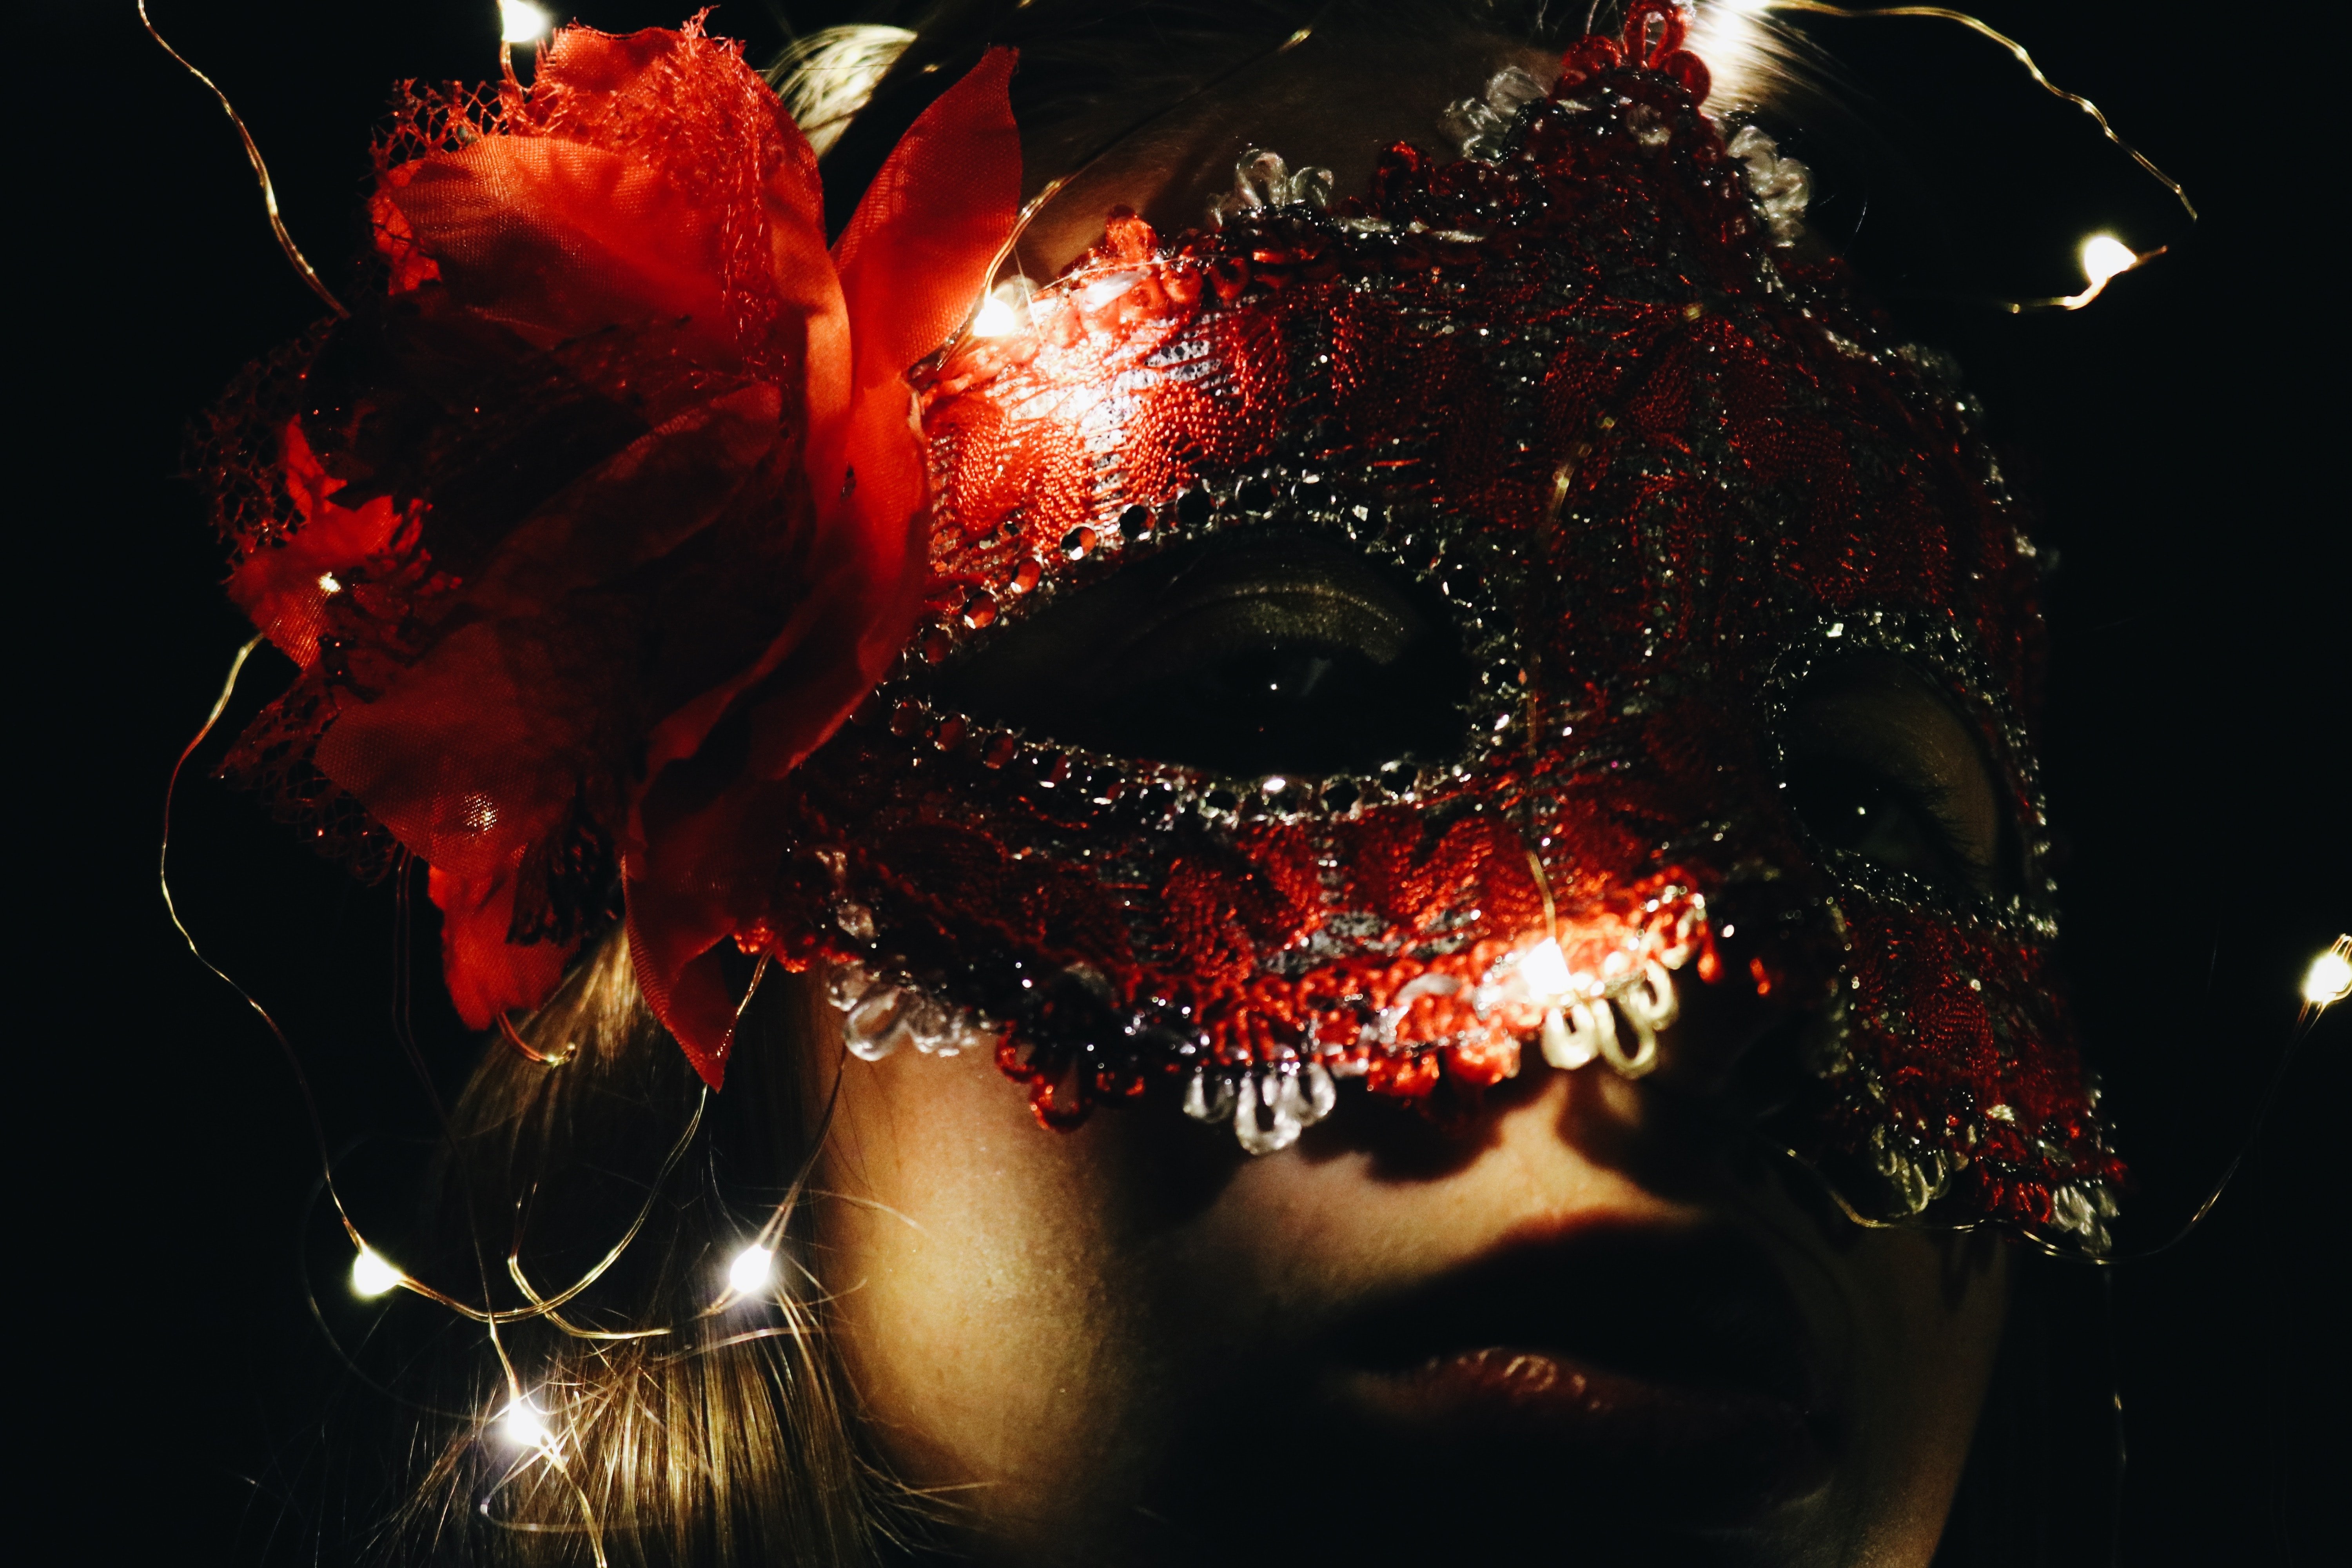 A woman wearing a masquerade mask | Source: Unsplash.com